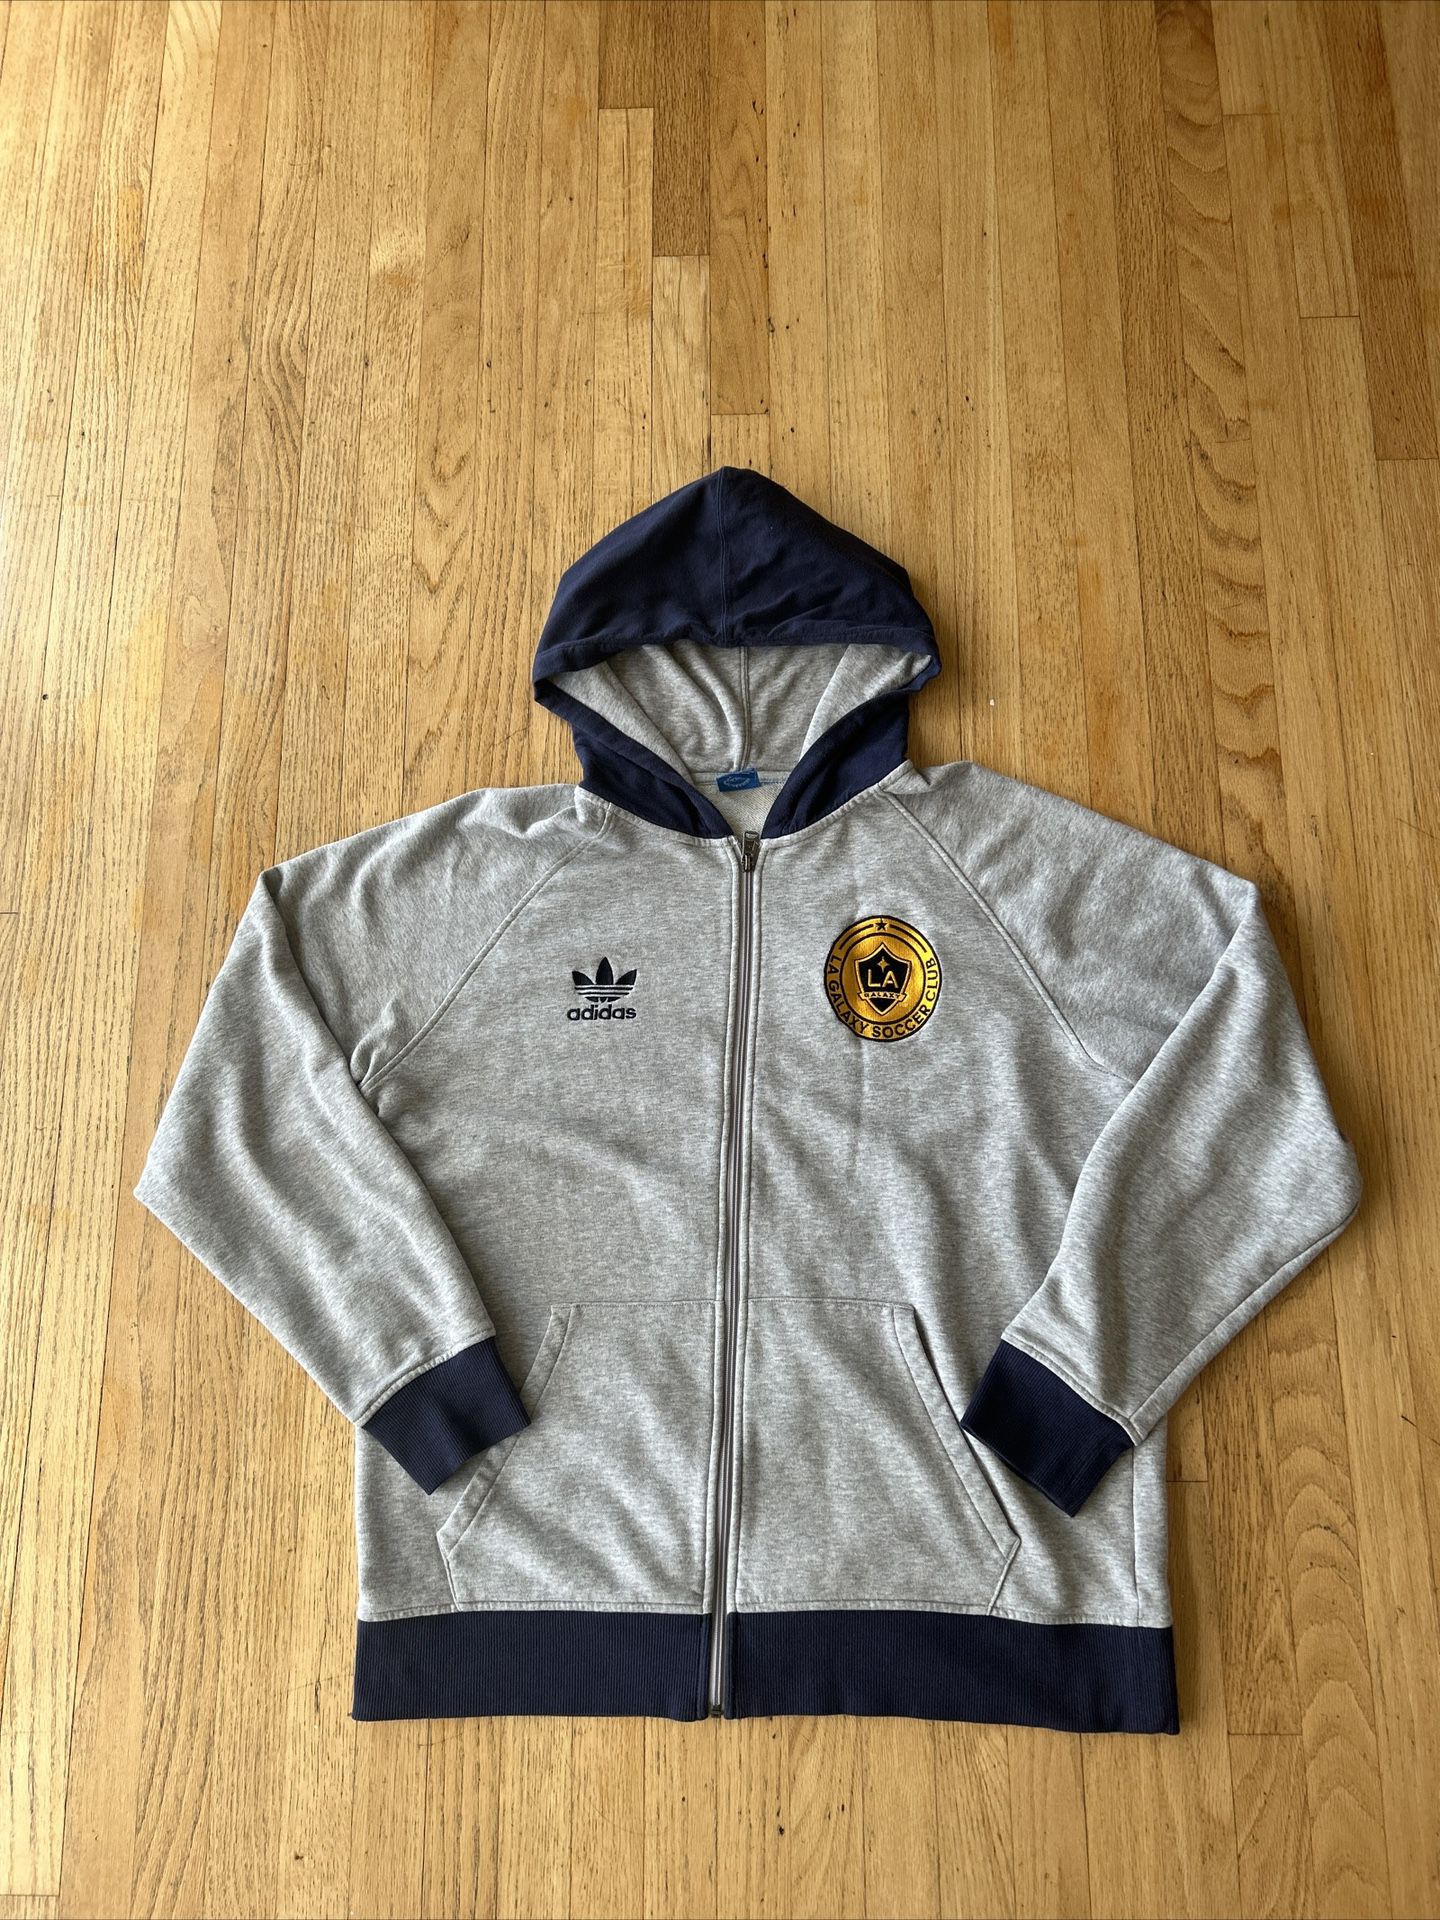 LA GALAXY Hoodie Mens XL Gray Blue Full Zip Embroidered Logo Soccer Adidas